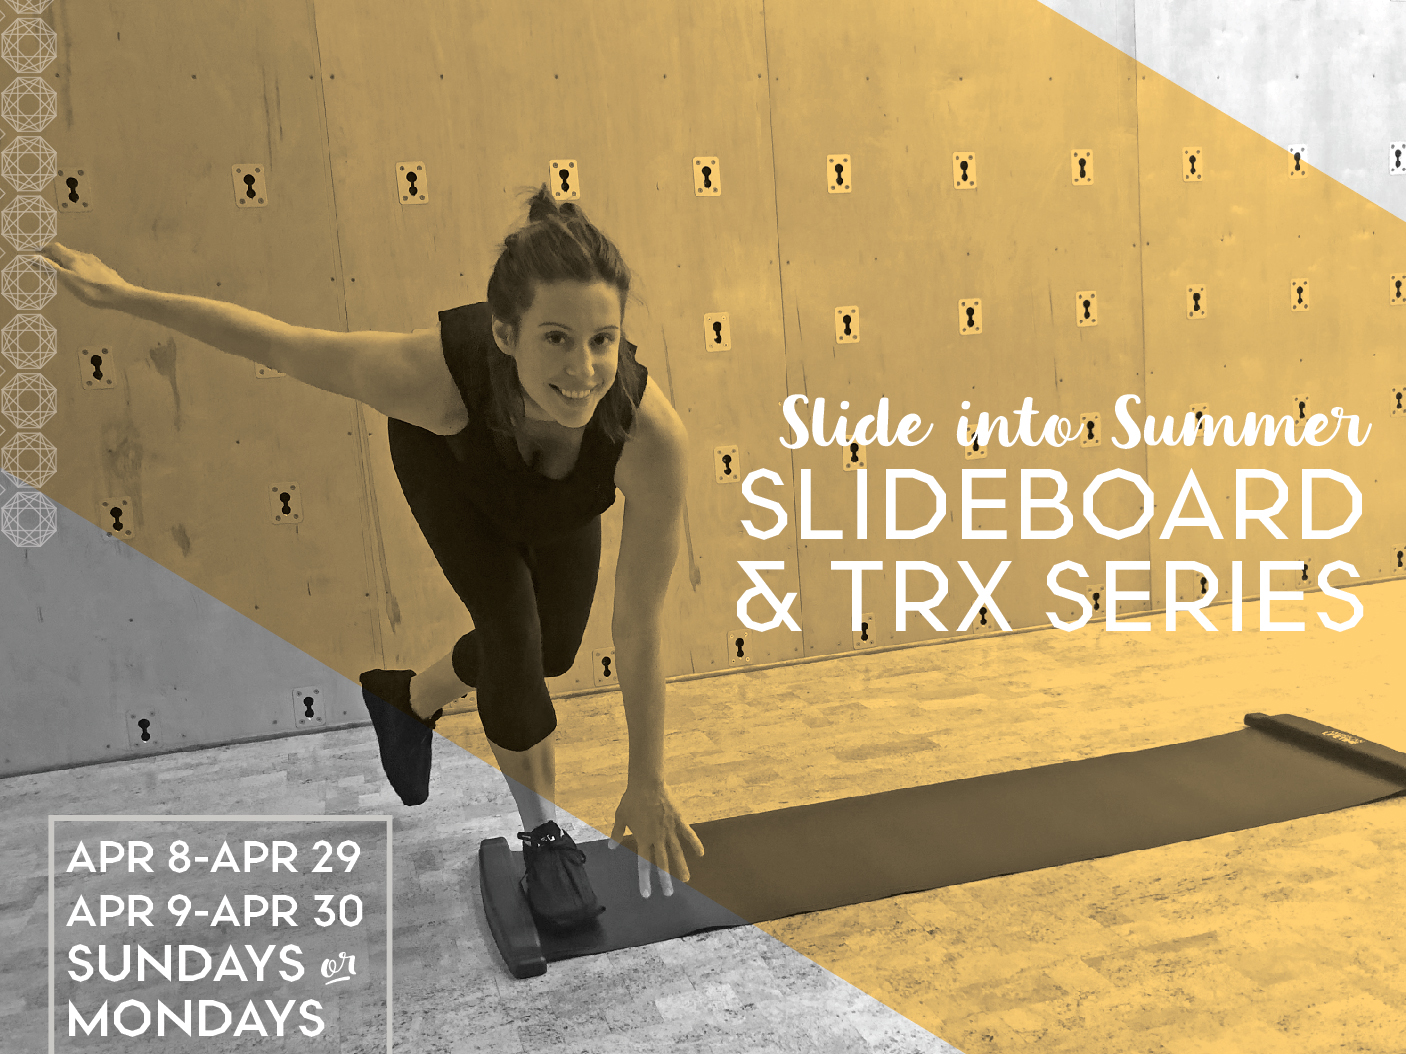 Slide into Summer: Slideboard & TRX Series